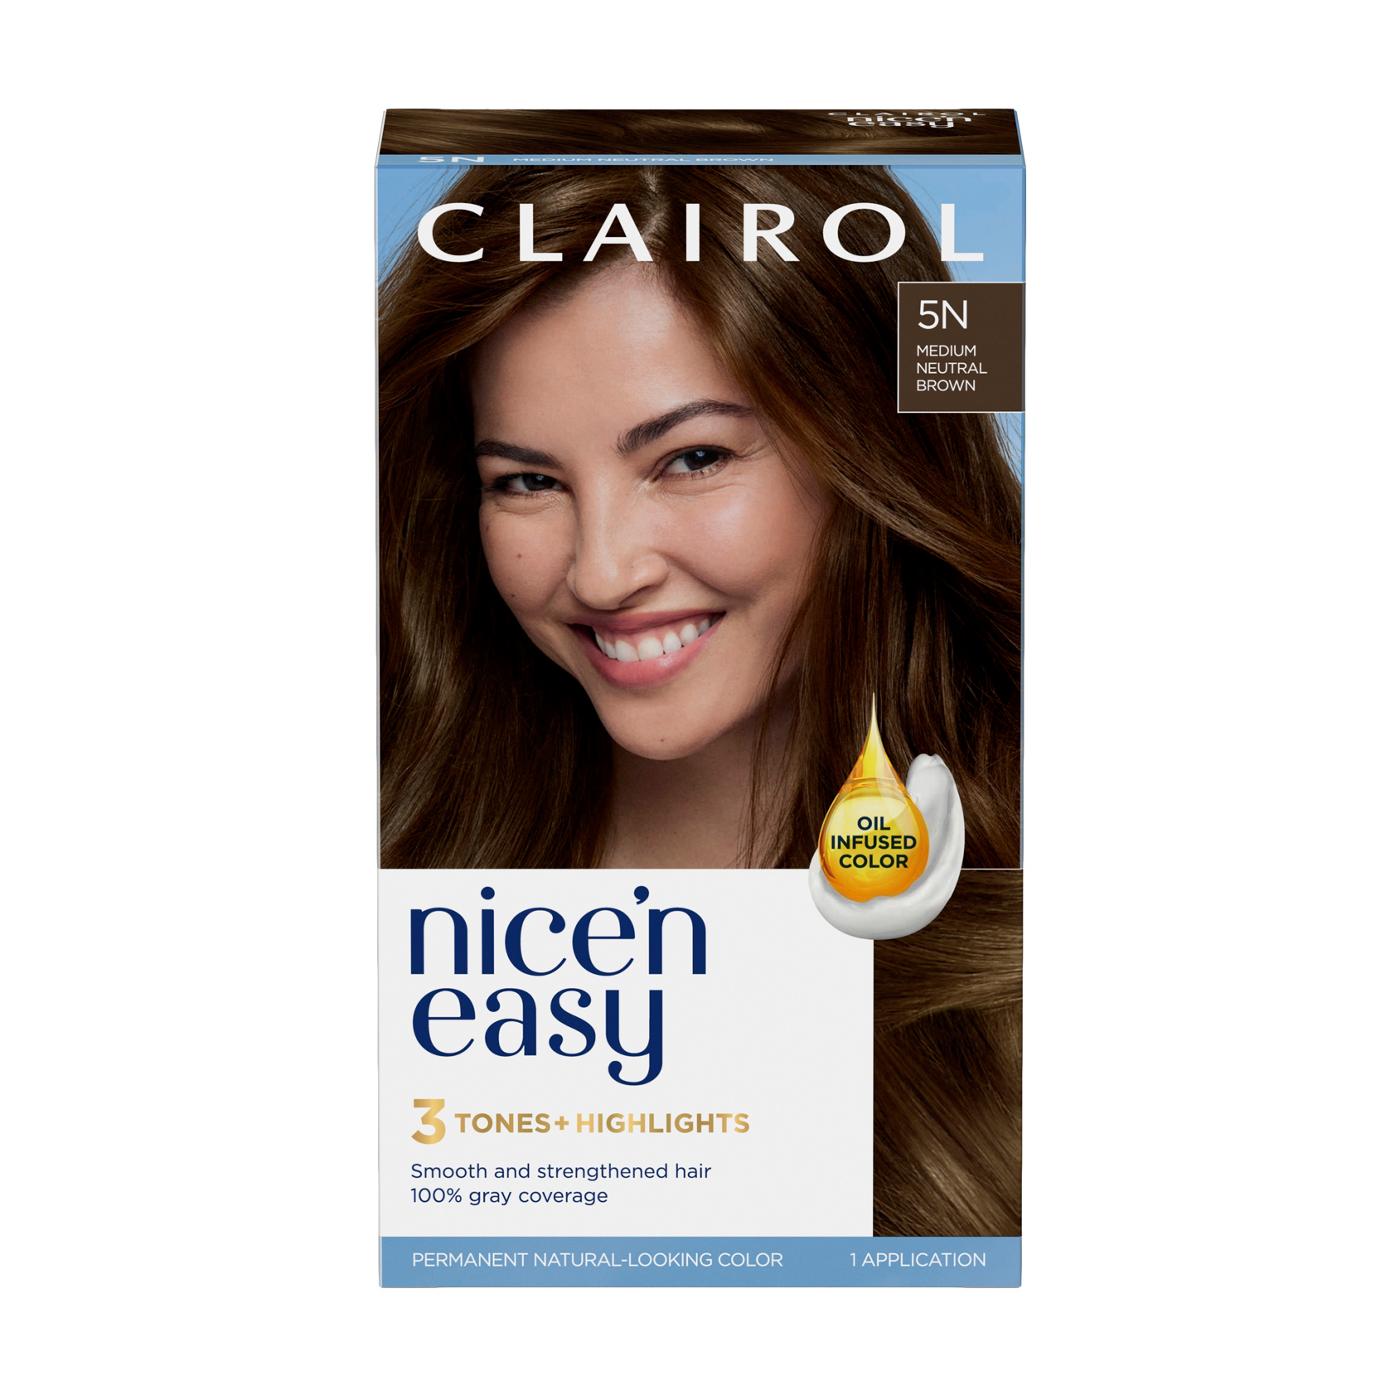 Clairol Nice 'N Easy Permanent Hair Color - 5 Medium Neutral Brown; image 1 of 10